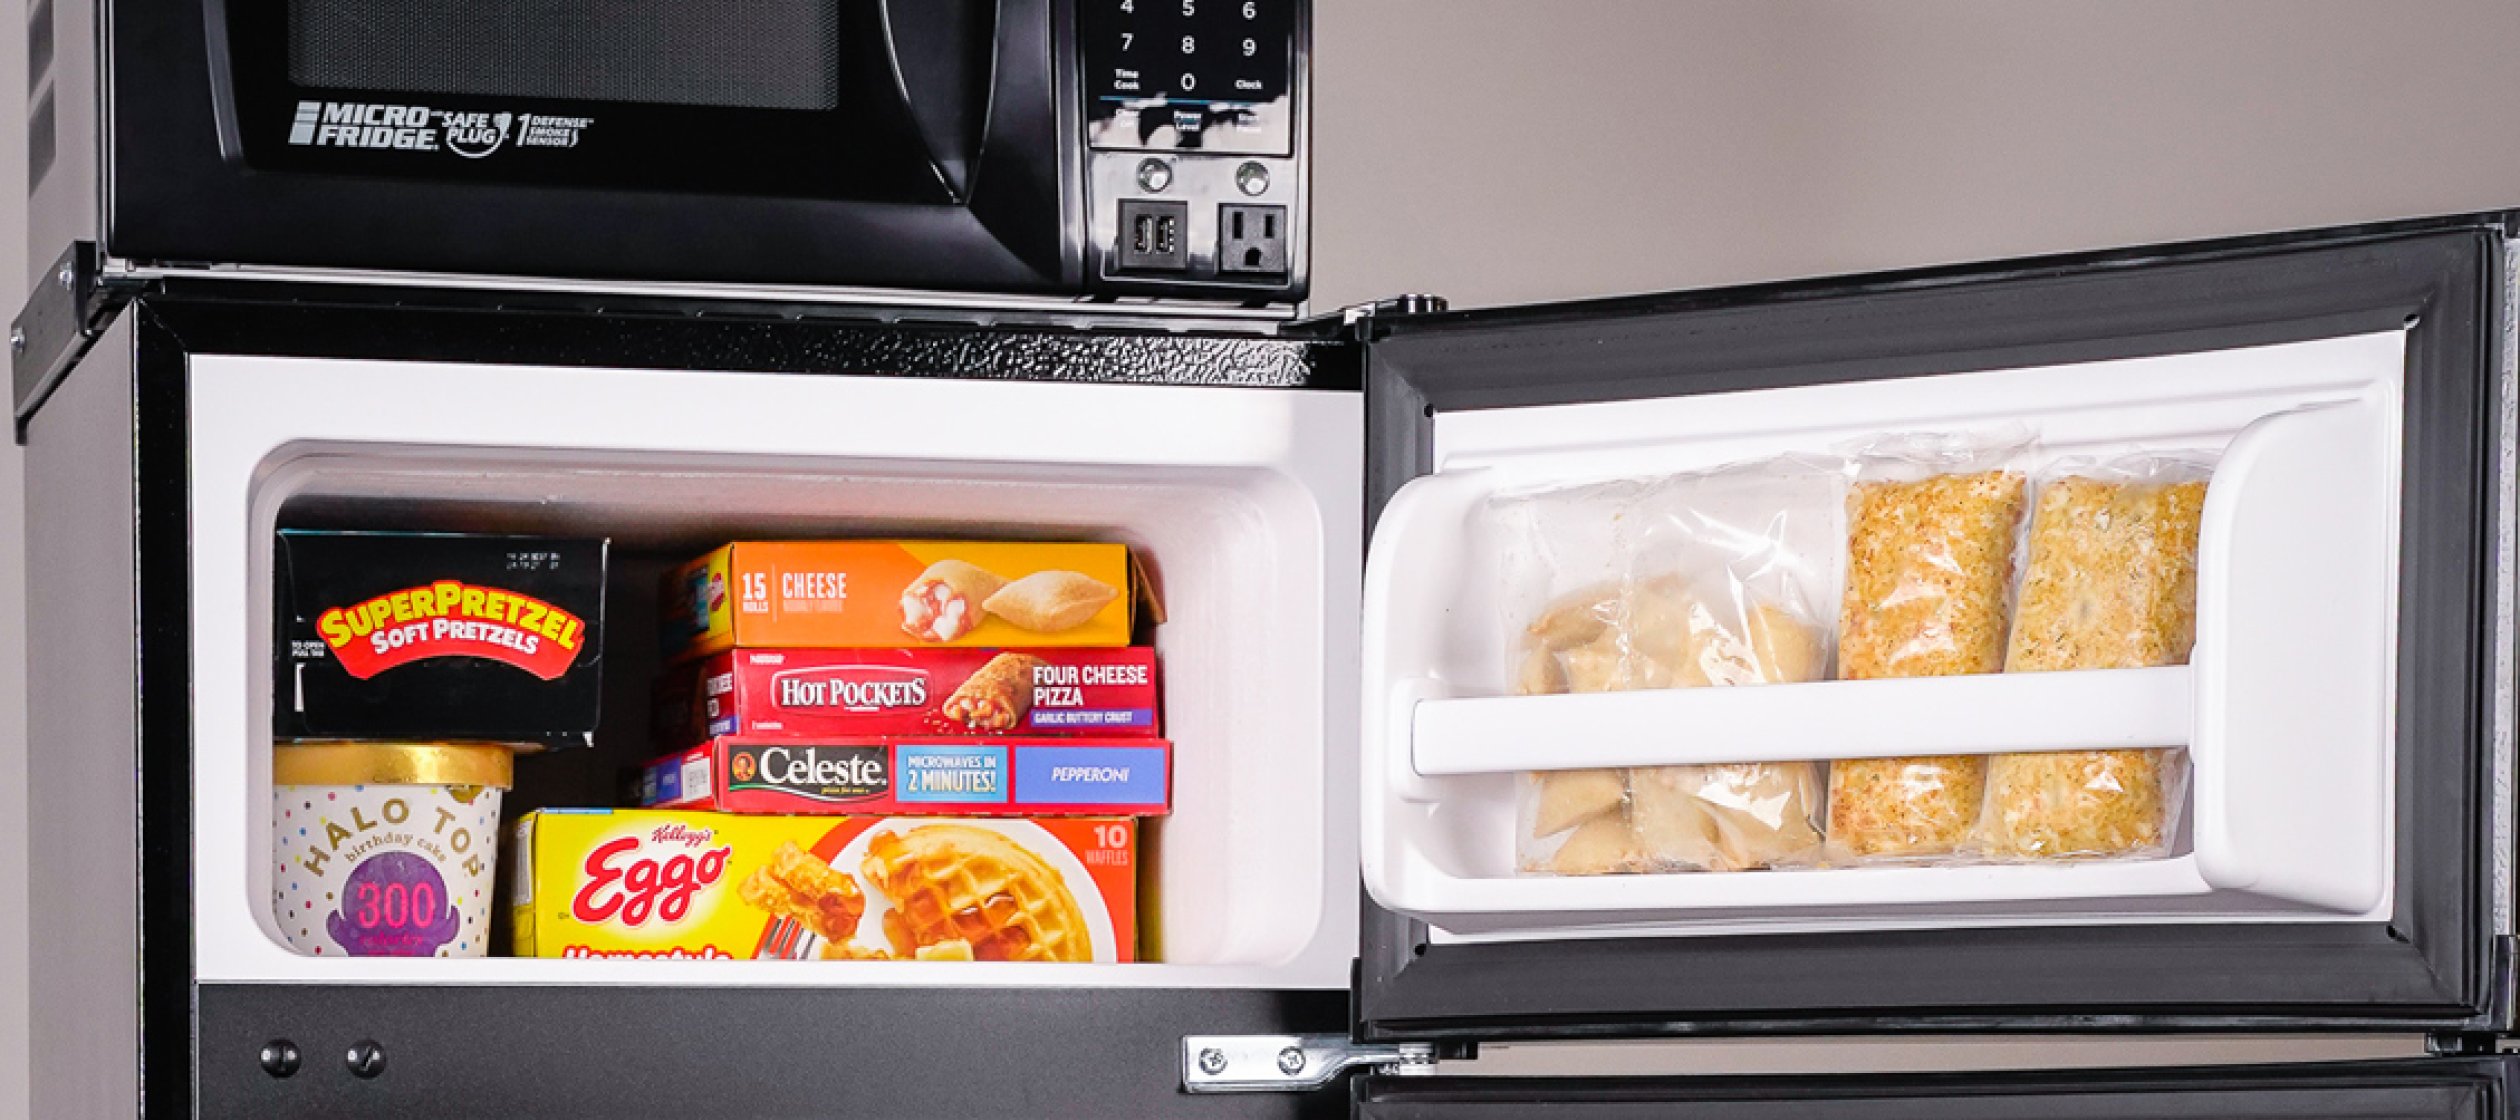 Microfridge combination microwave, refrigerator and freezer.